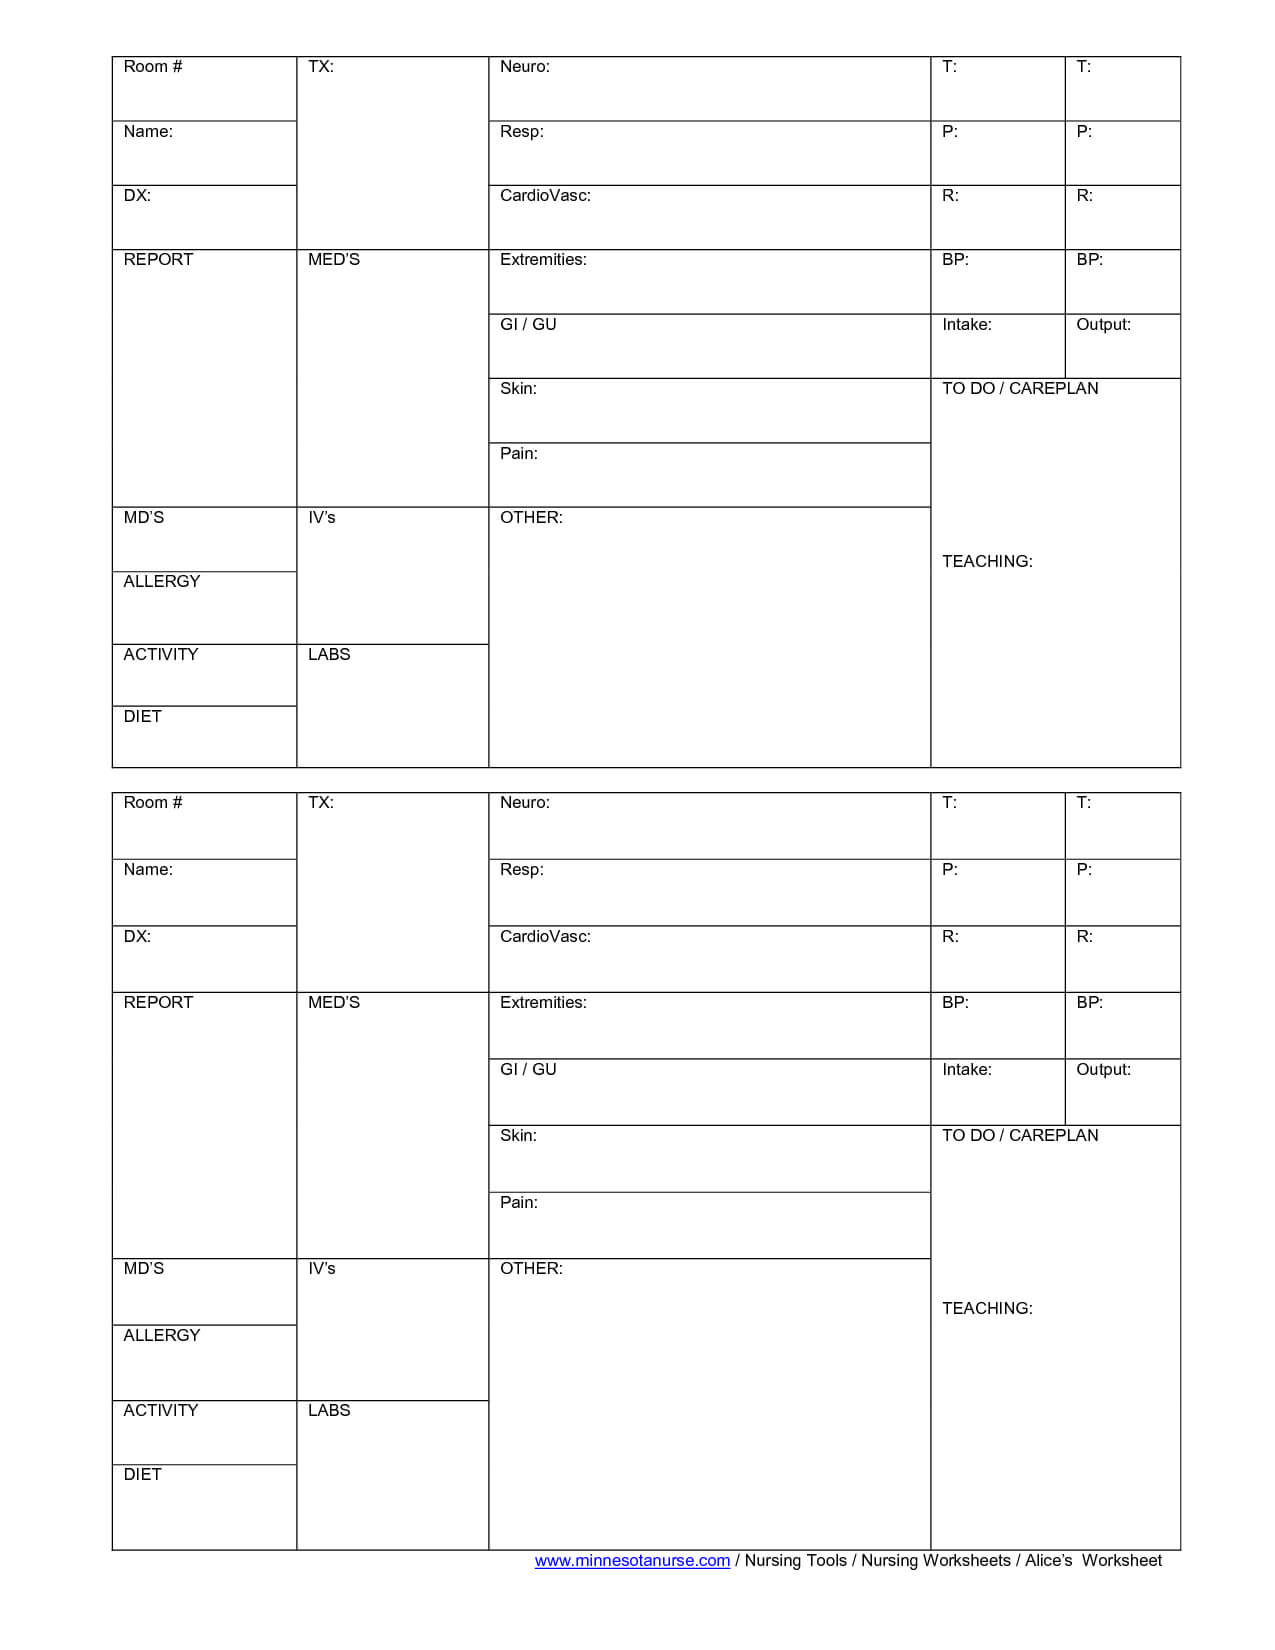 Blank Nursing Report Sheets For Newborns | Nursing Patient For Nurse Report Sheet Templates